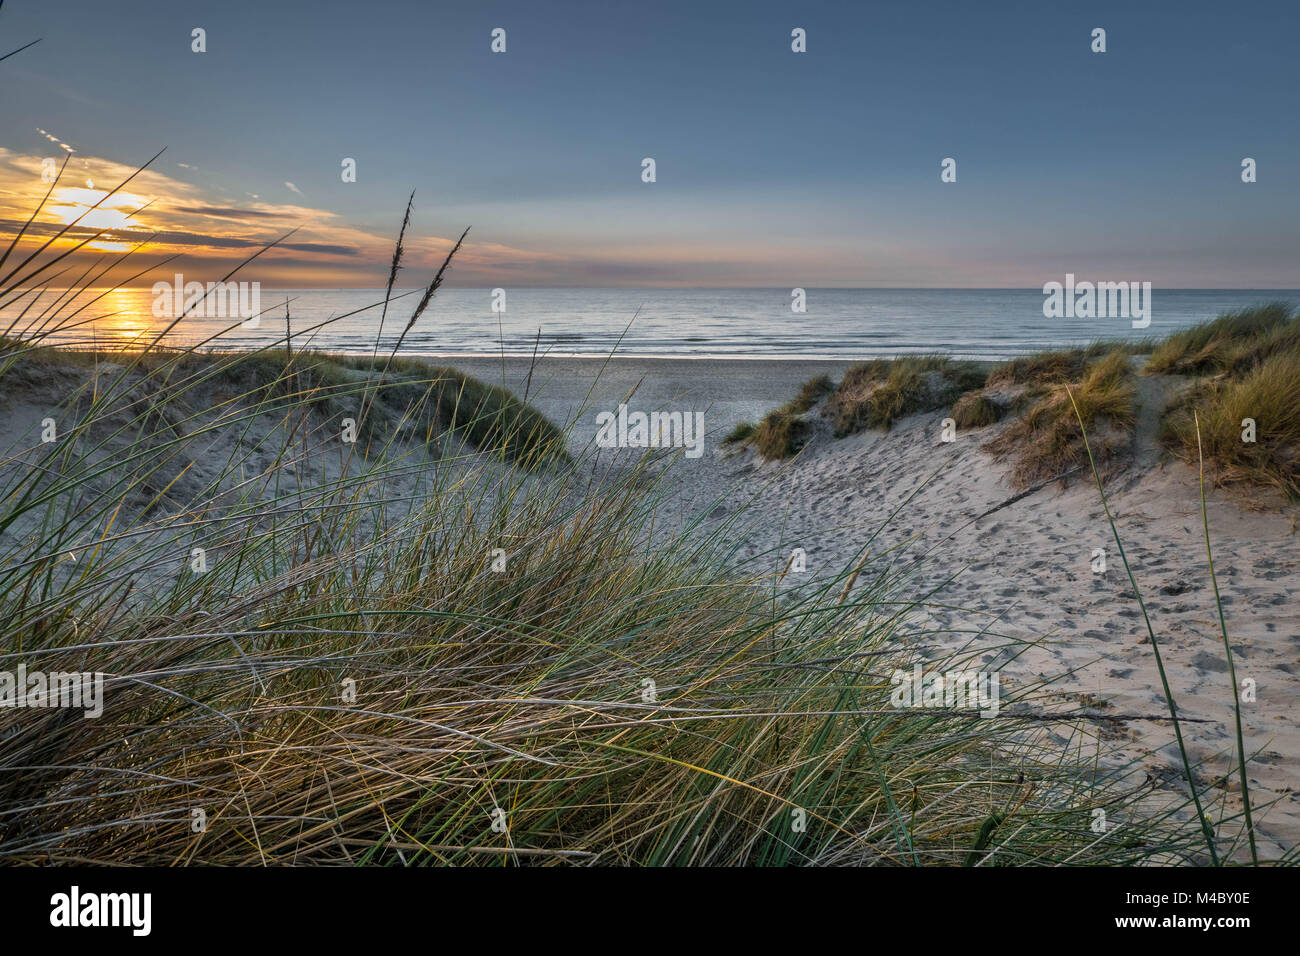 Beachview from dunes with marram grass at sunset Stock Photo